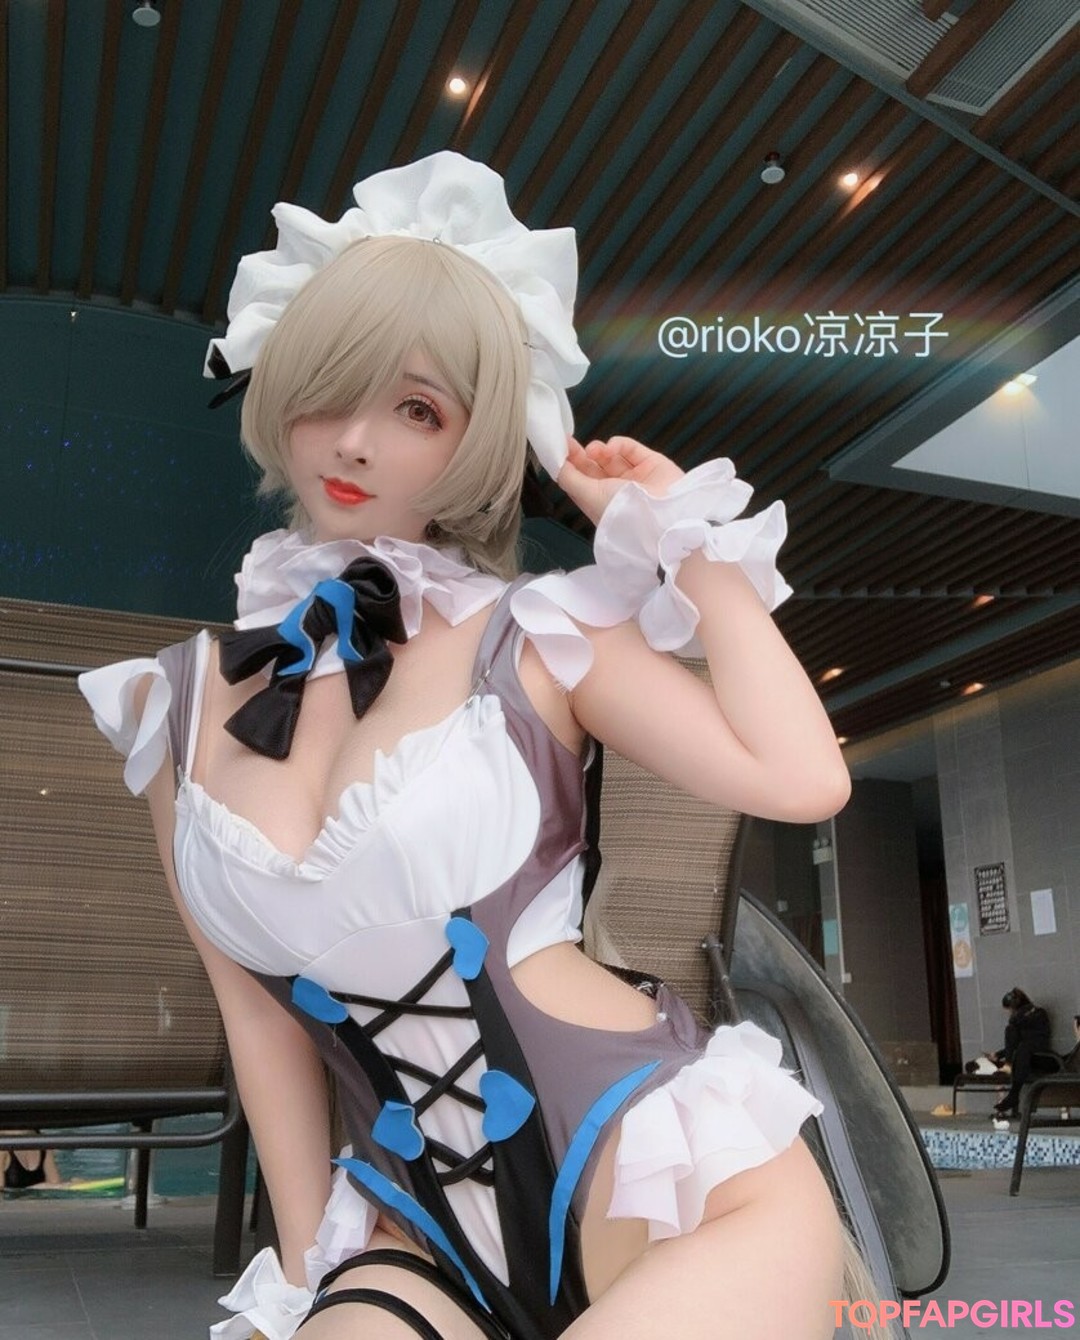 https://img.topfapgirls1.com/1/35/34445/rioko-cosplay/rioko-cosplay-228-1080px.jpg